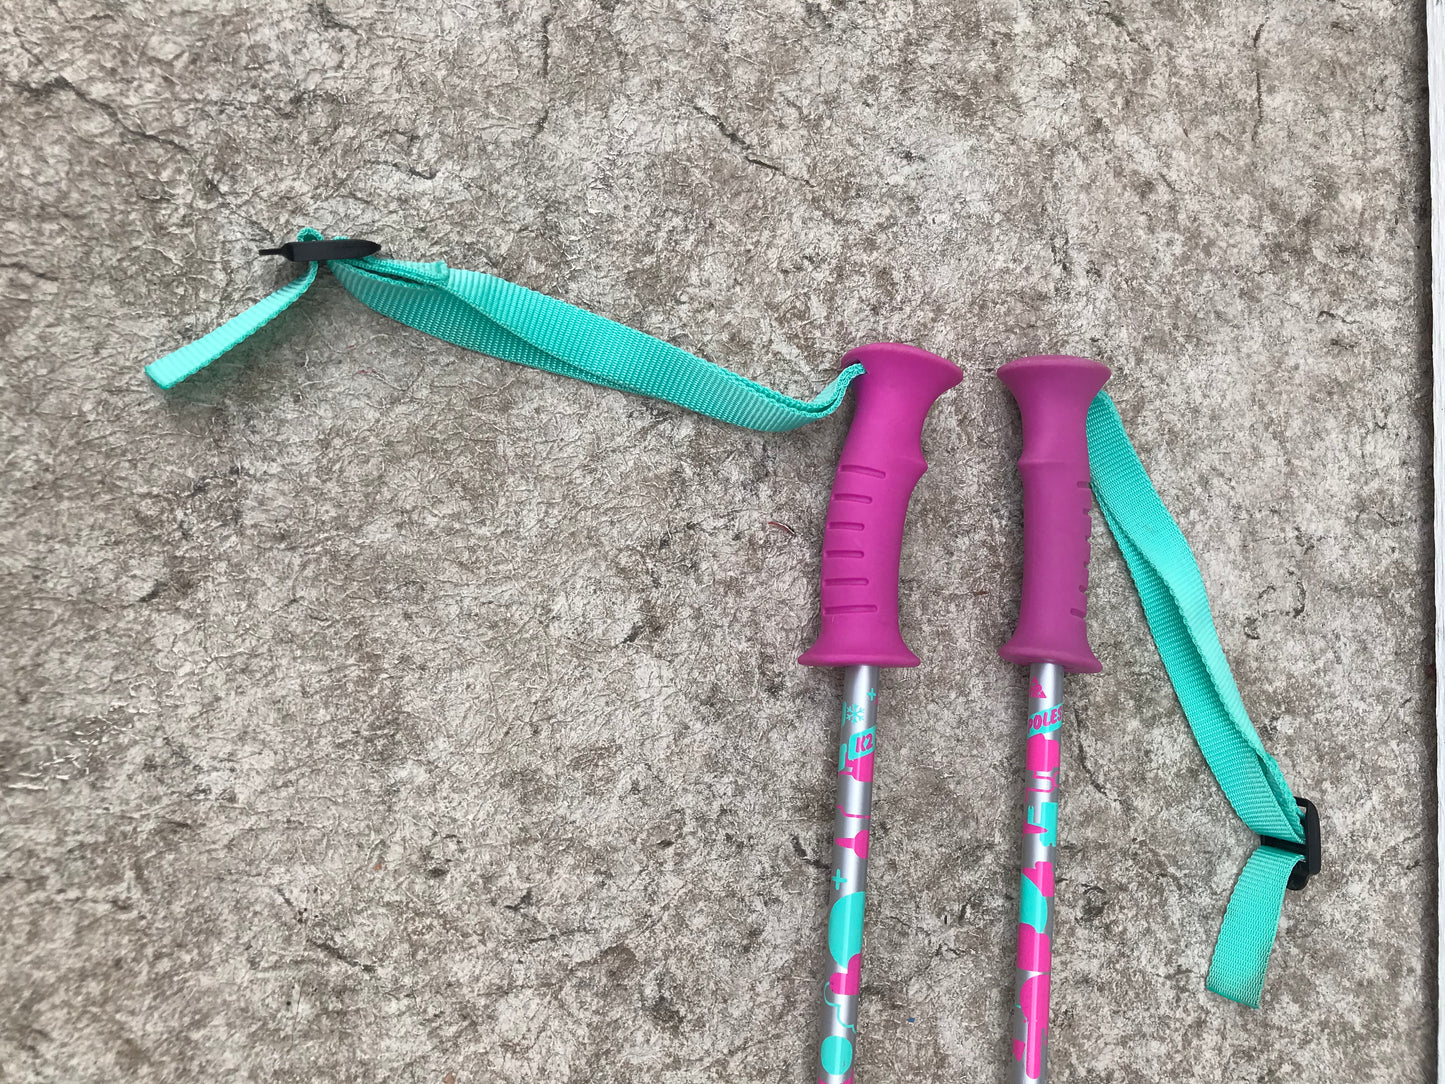 Ski Poles Child Size 40 inch K-2 Teal Fushia Pink Silver Rubber Handles As New